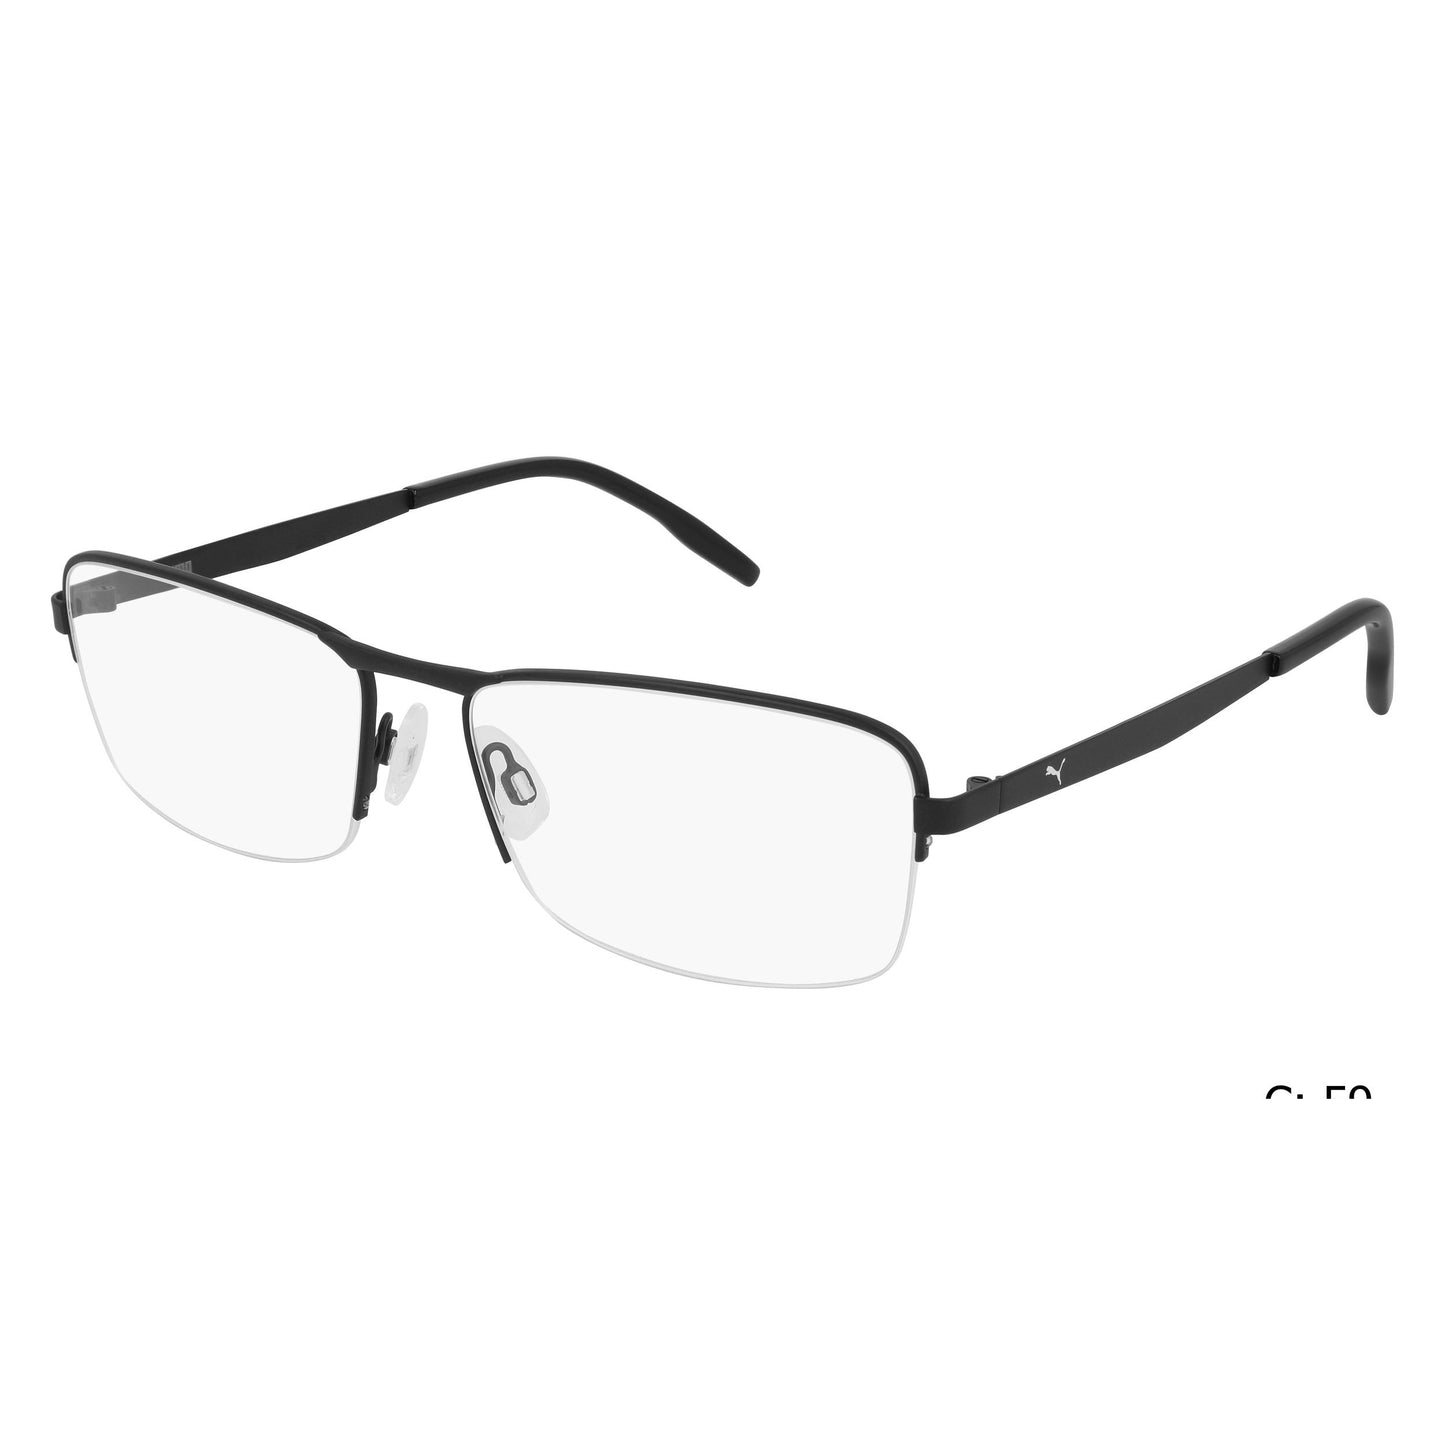 Puma PE0132o-001 59mm New Eyeglasses